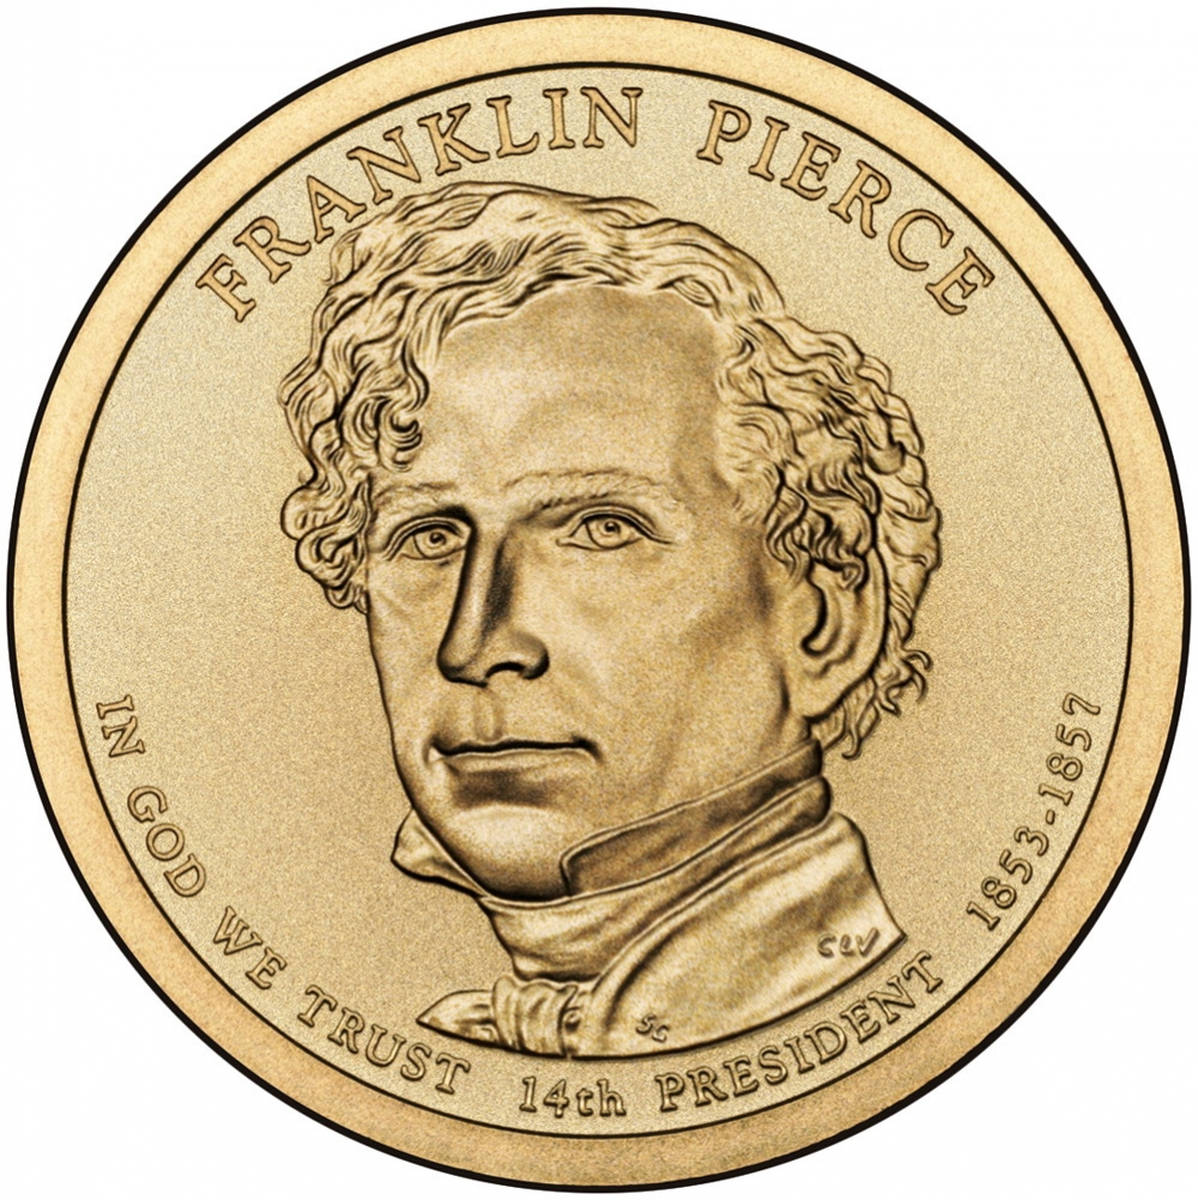 США 1 доллар 2010 года президент №14 Франклин Пирс